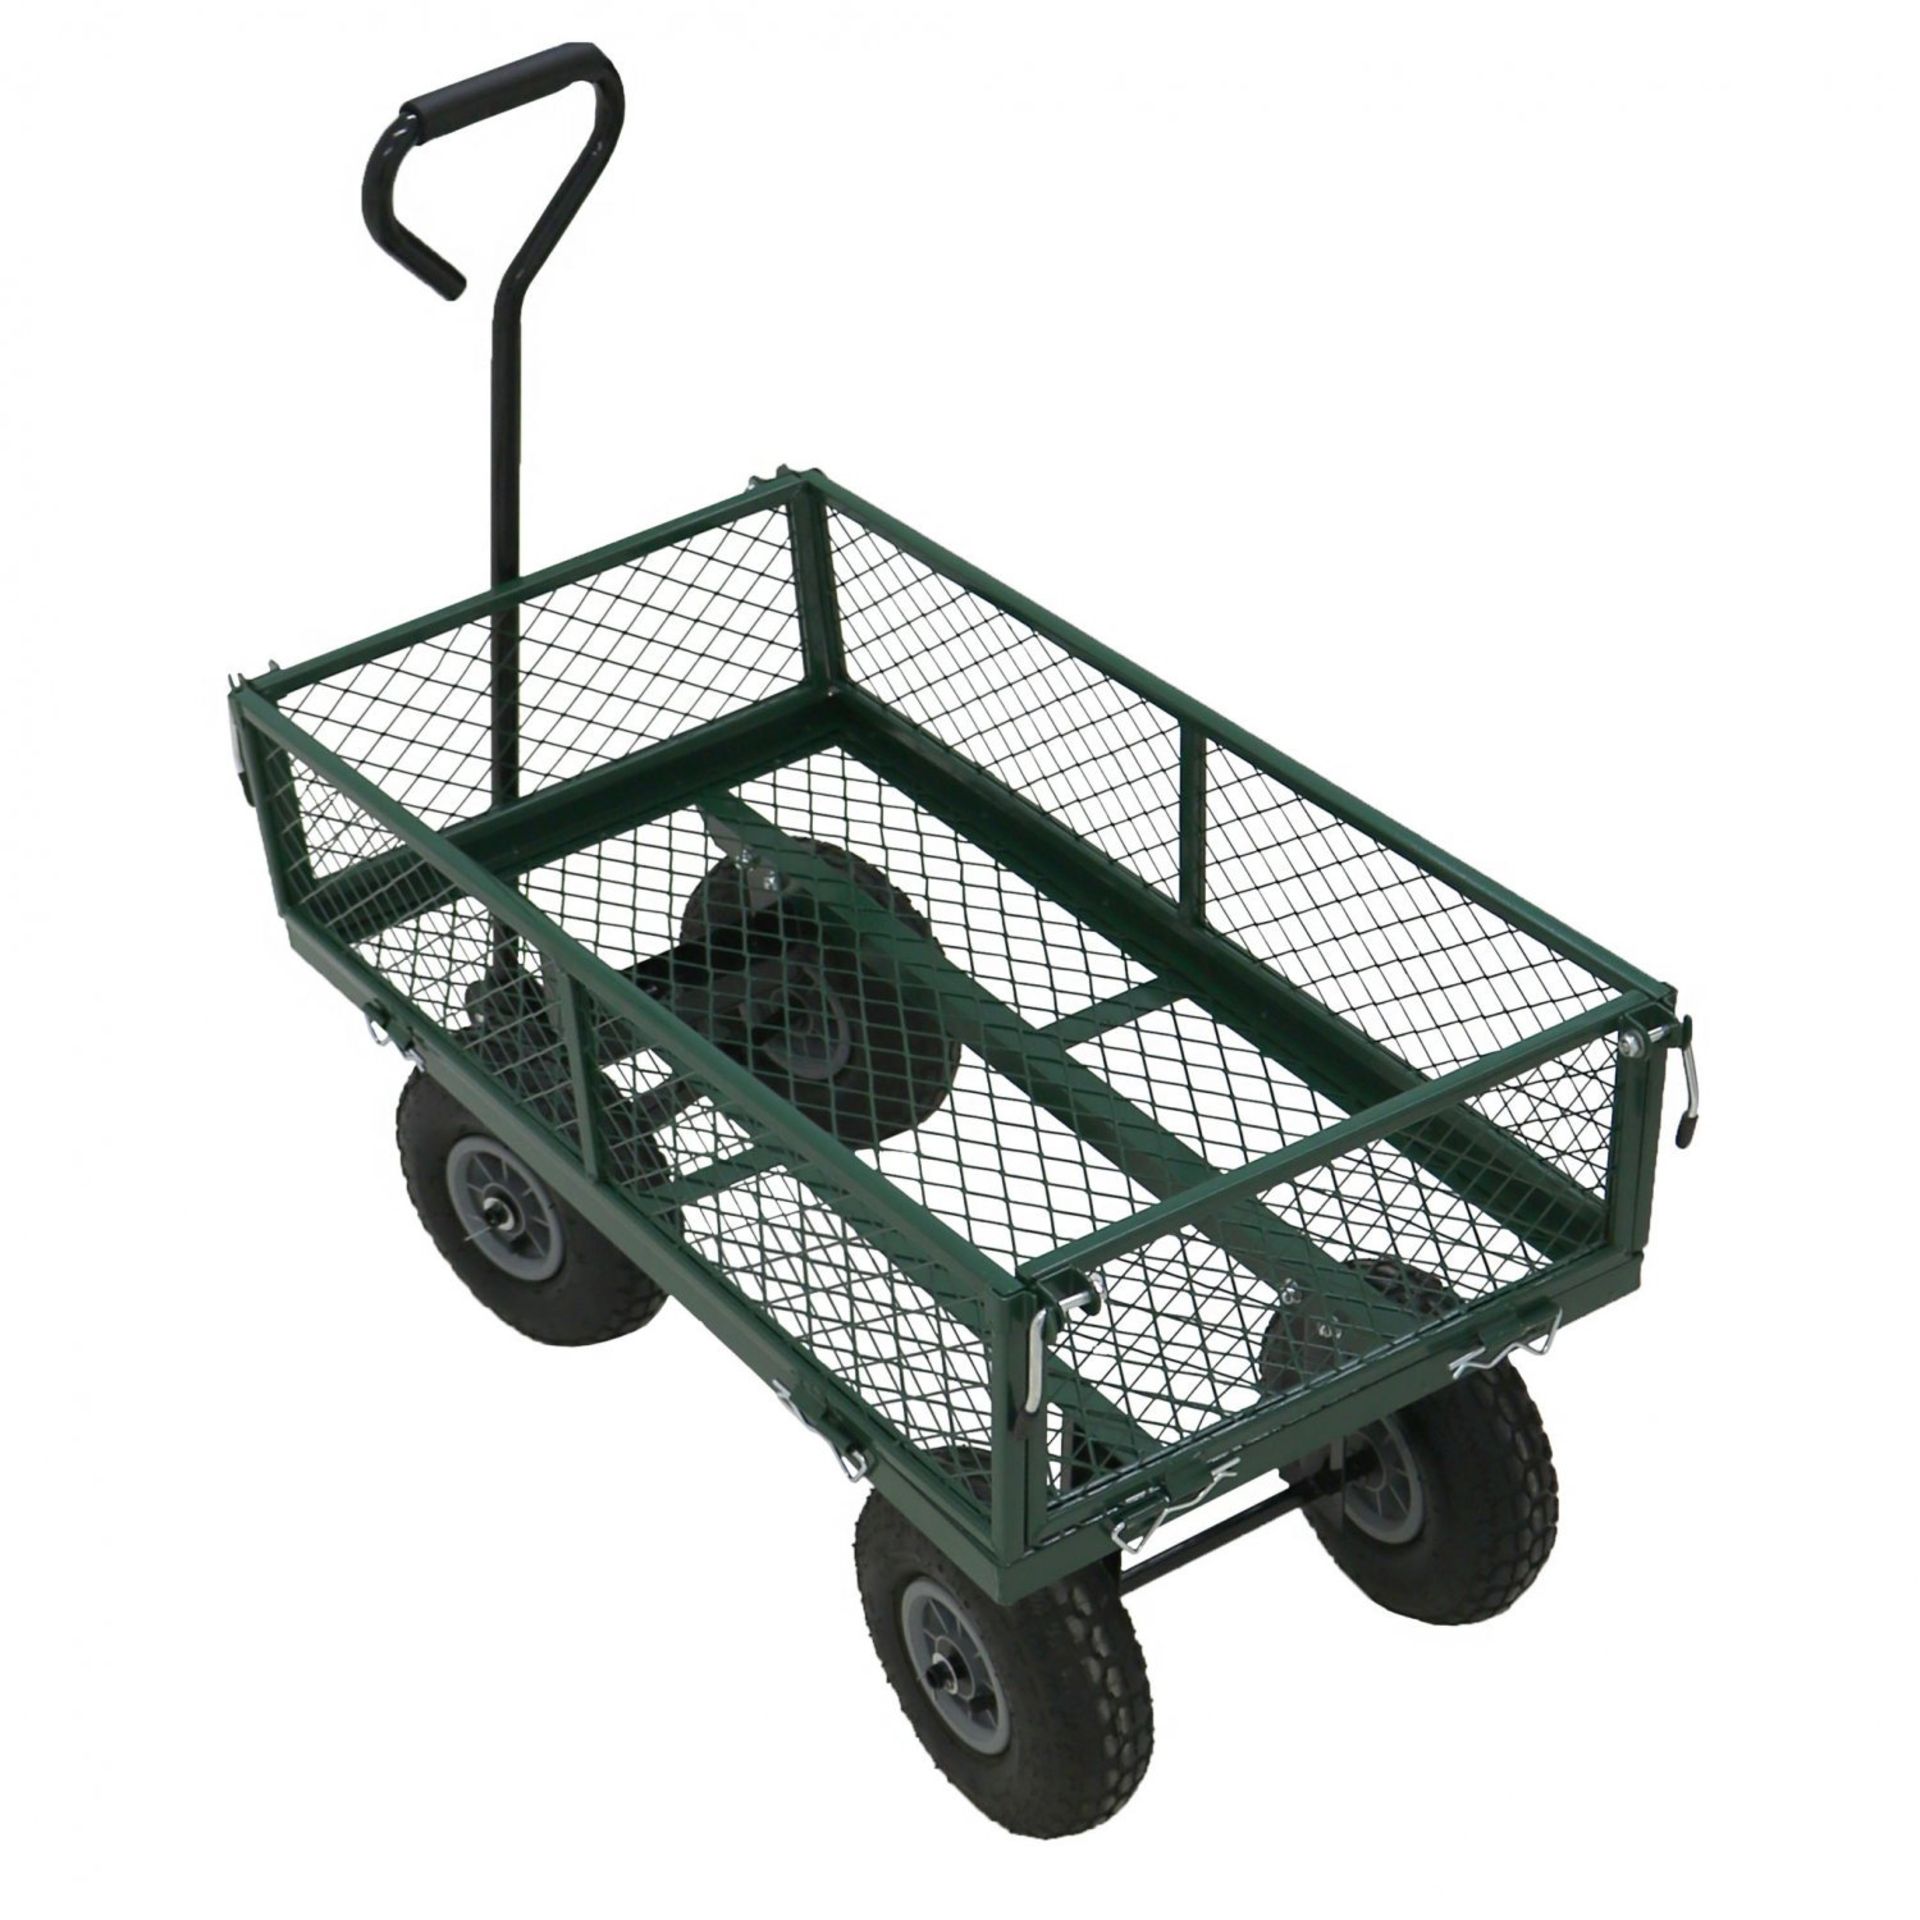 (RL50) Heavy Duty Metal Gardening Trolley - Green Trailer Cart Our latest arrival is the gar... - Bild 2 aus 2